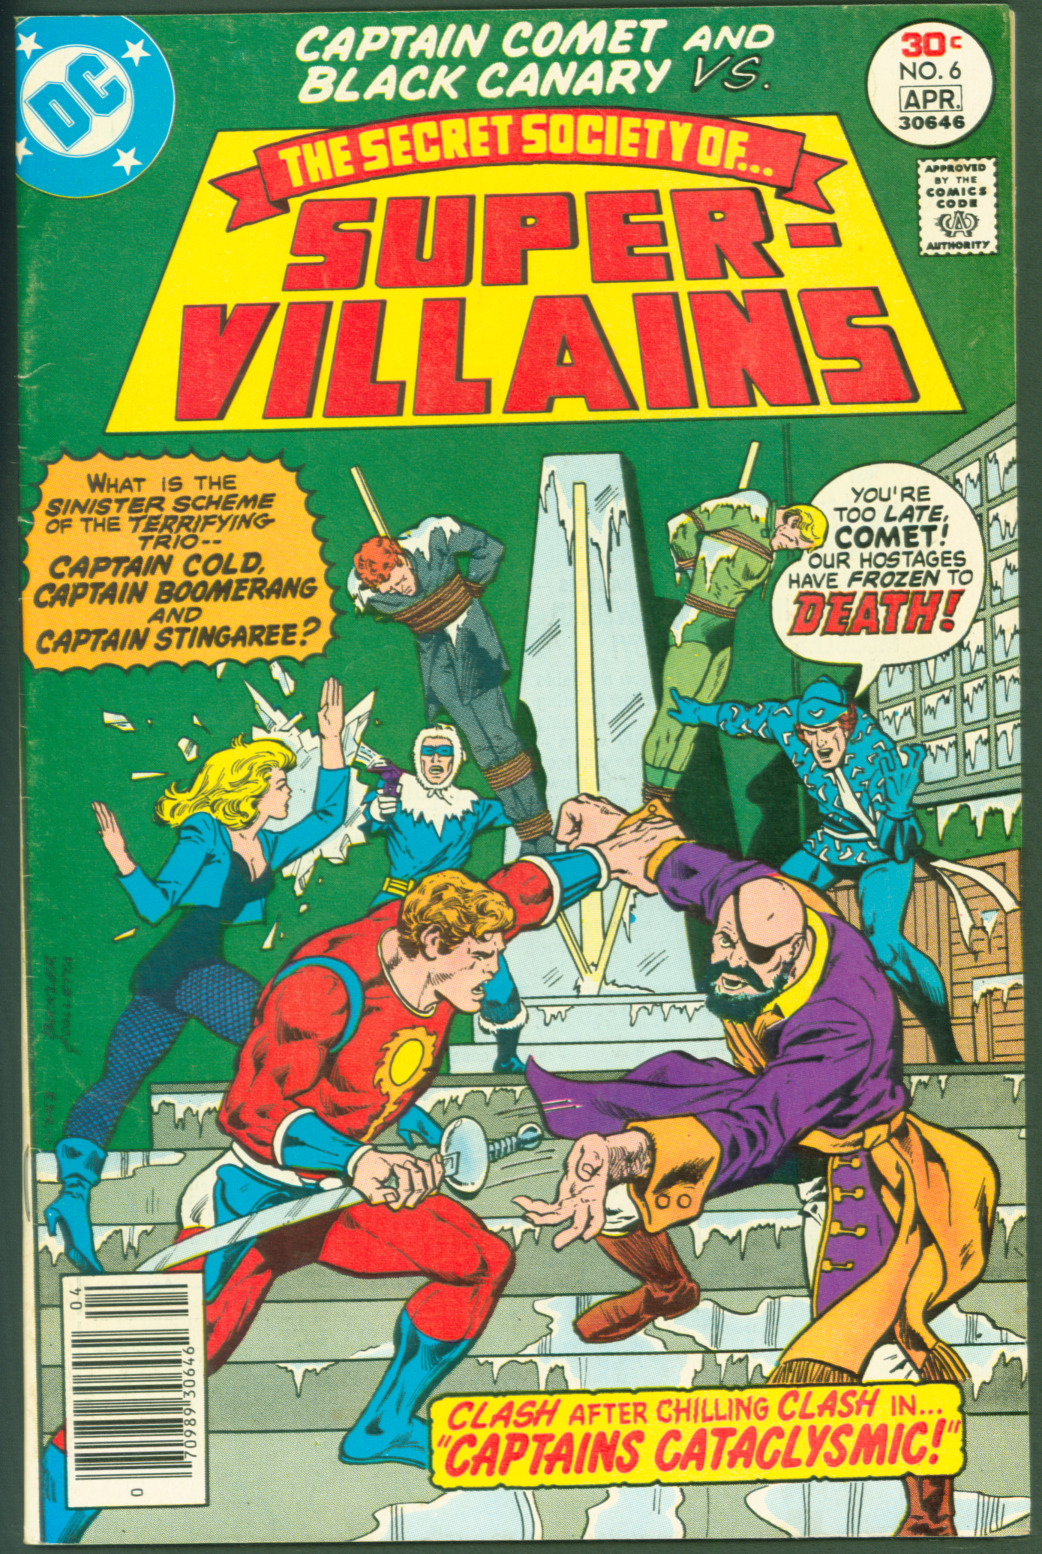 VTG 1977 DC Comics Secret Society of Super Villains #6 FINE Black Canary